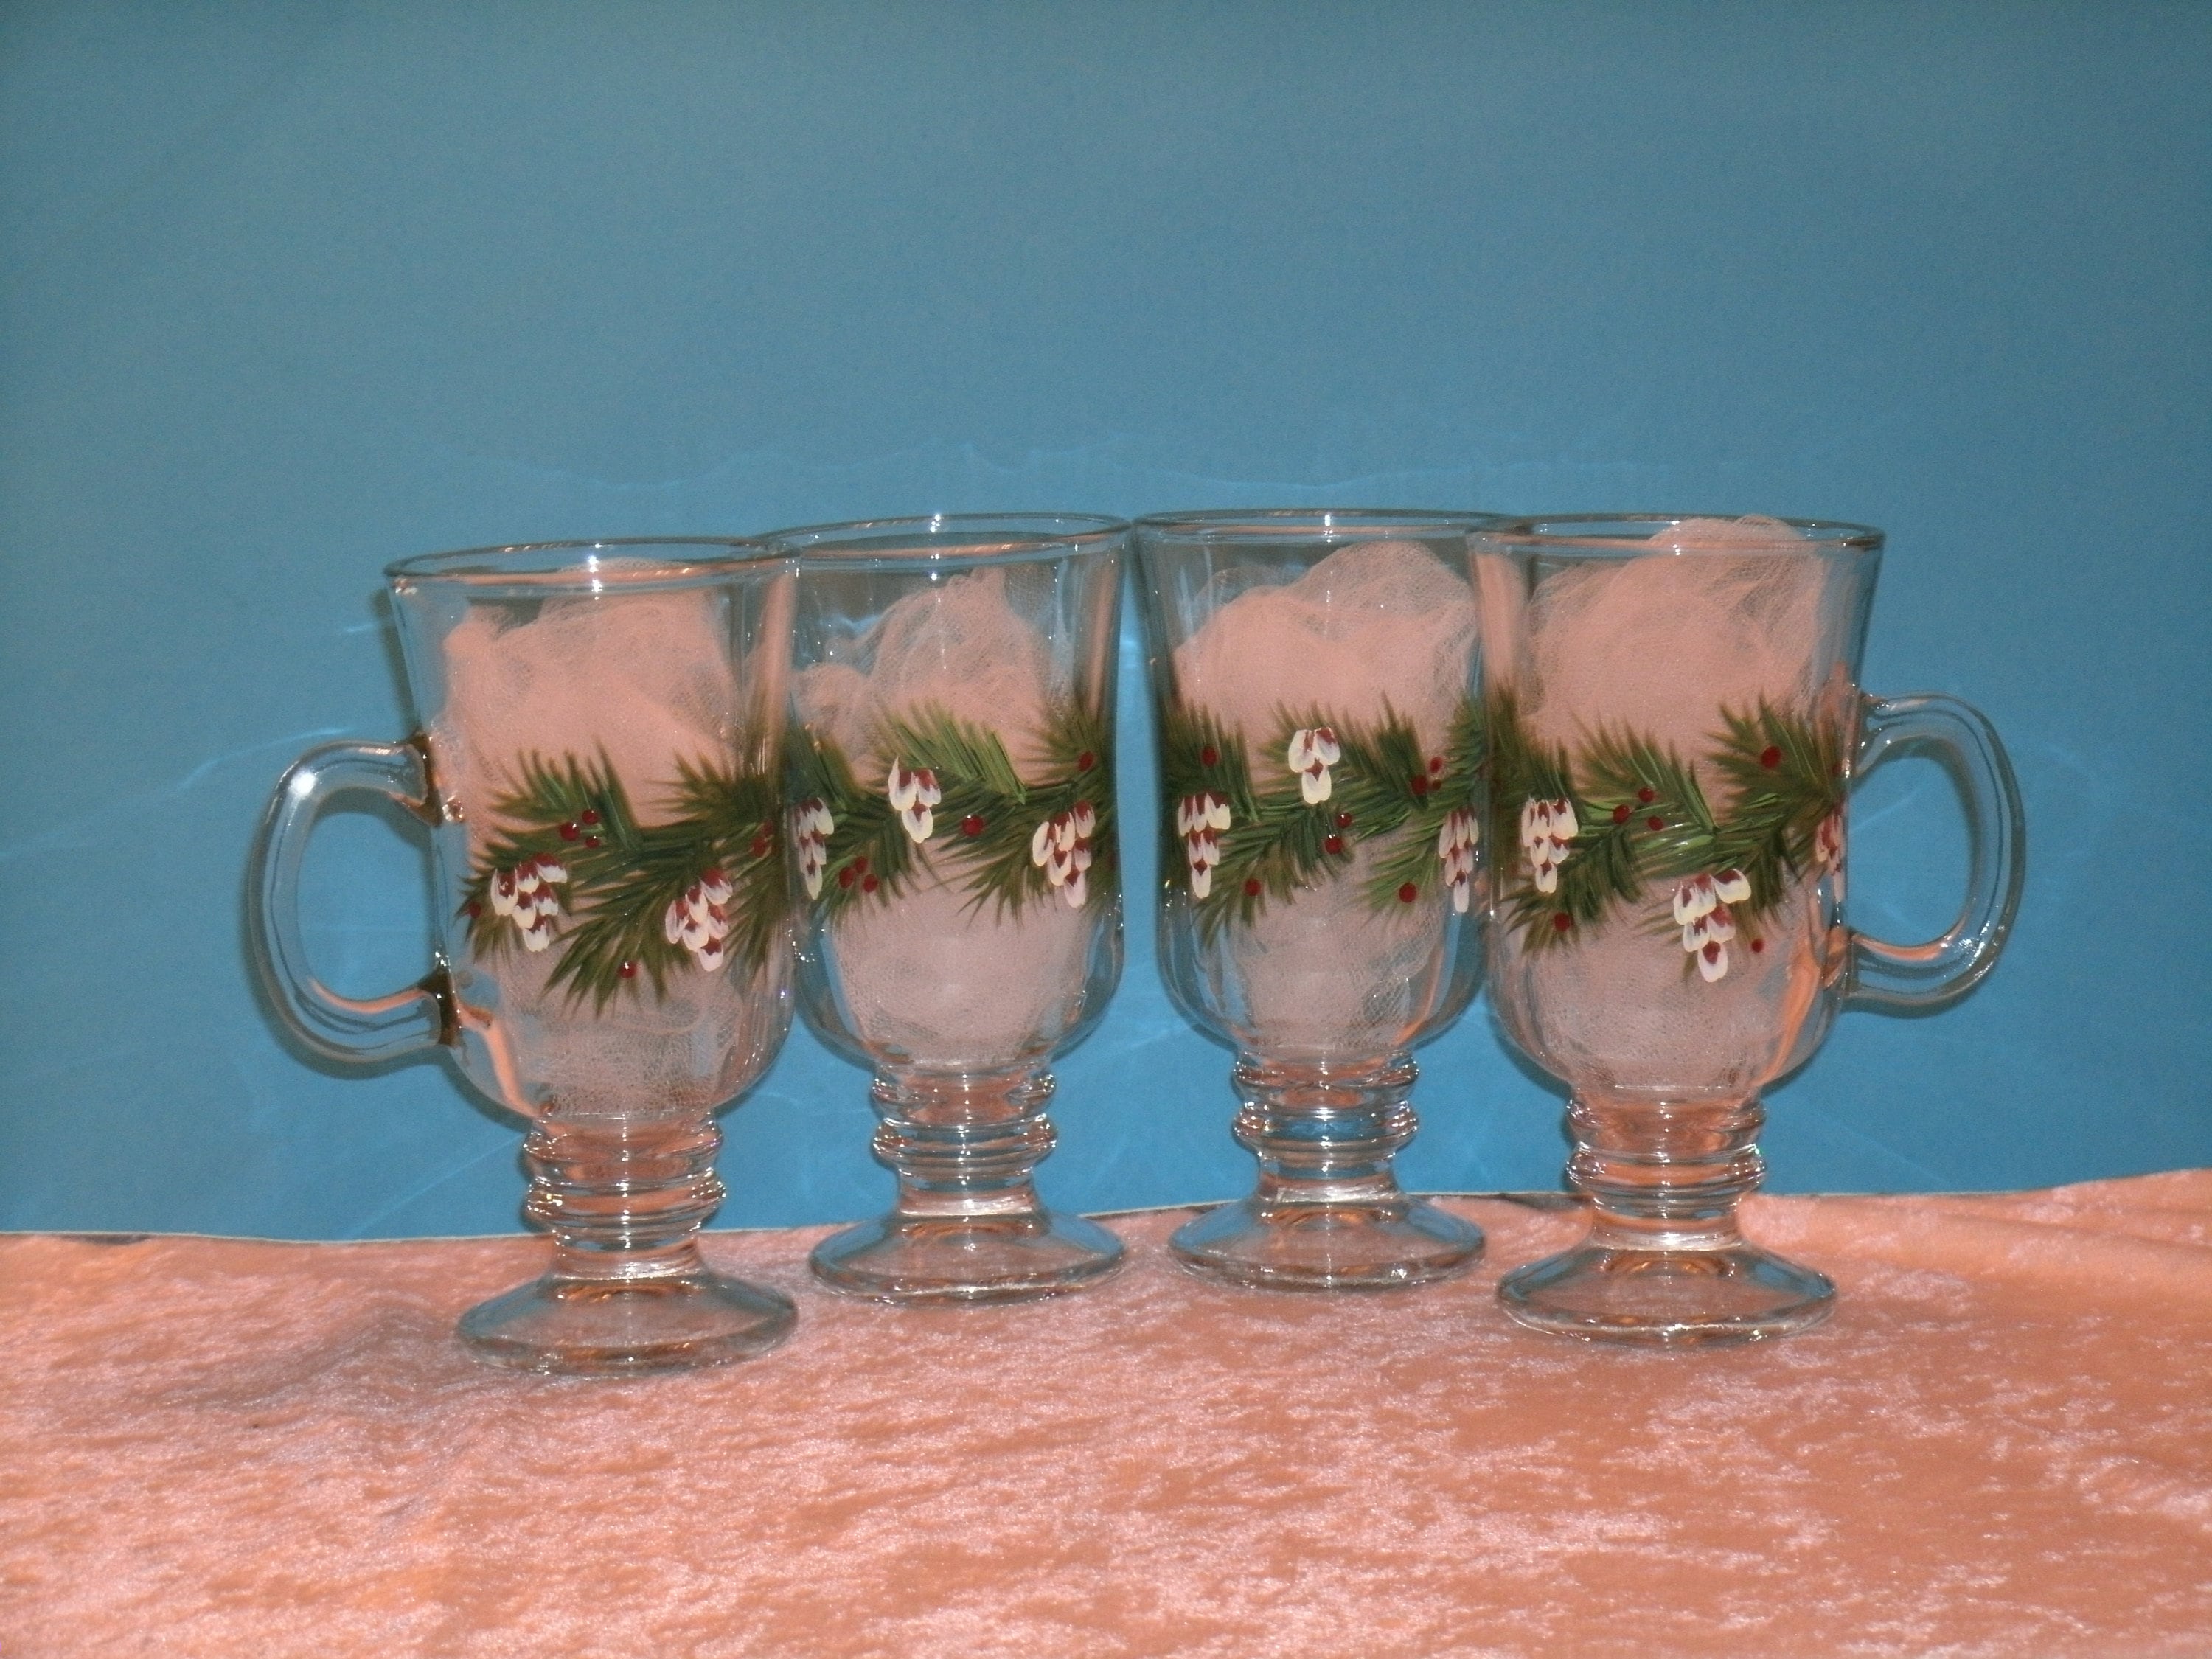 Vintage Schmid Irish Coffee Recipe Glasses Goblets - Set of 4